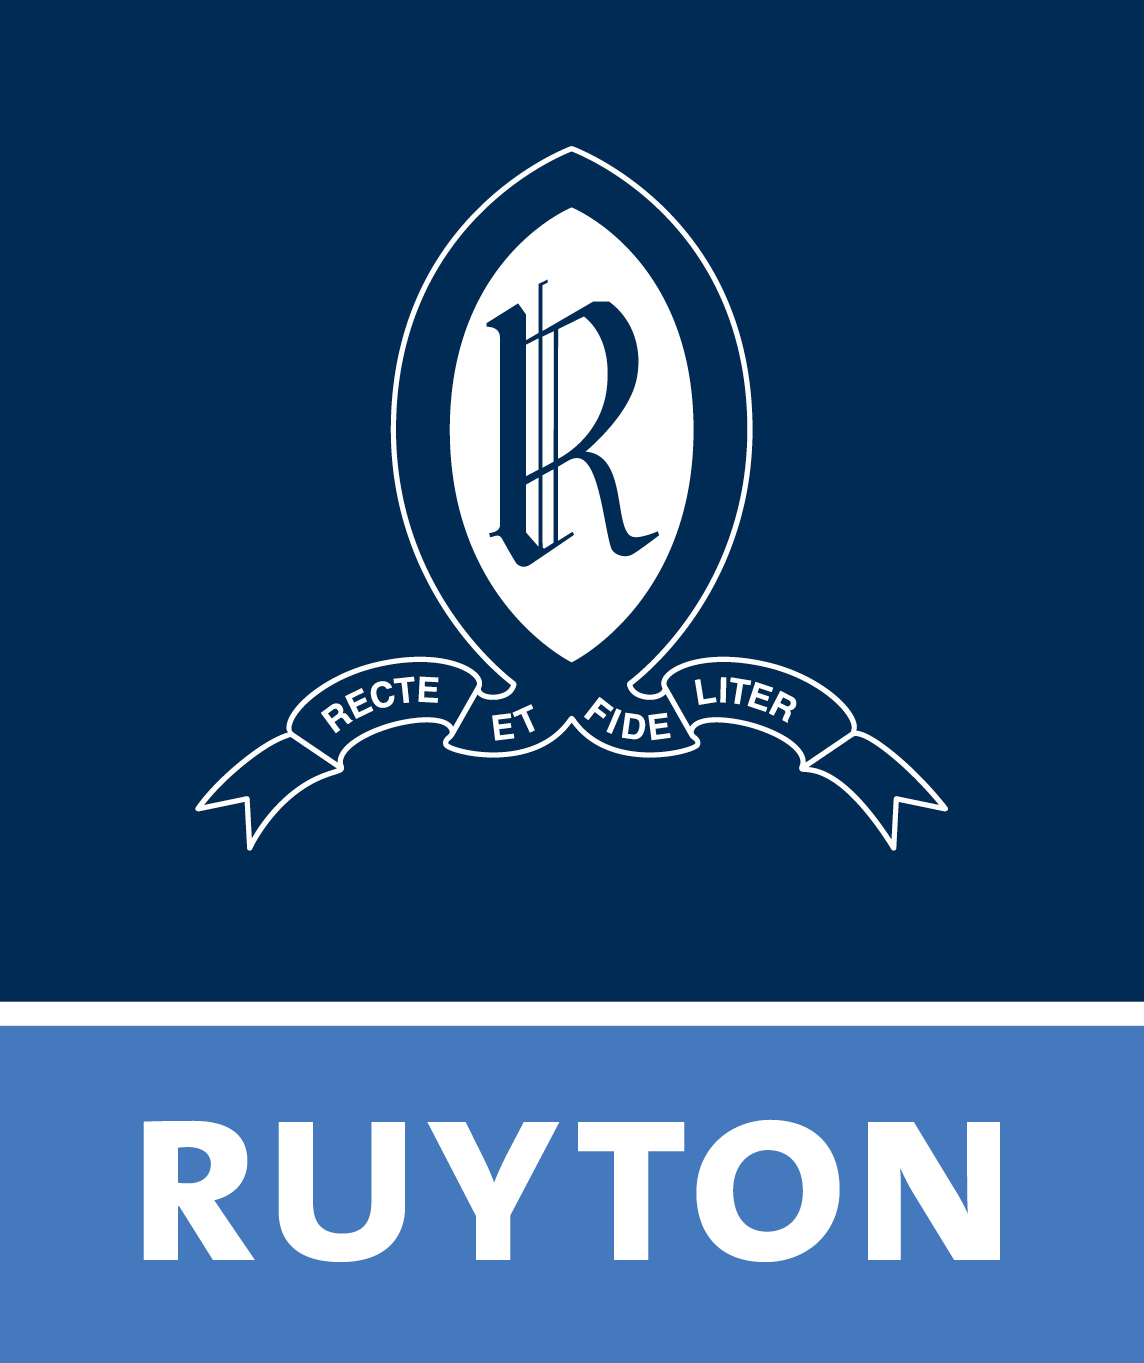 Ruyton logo .jpeg